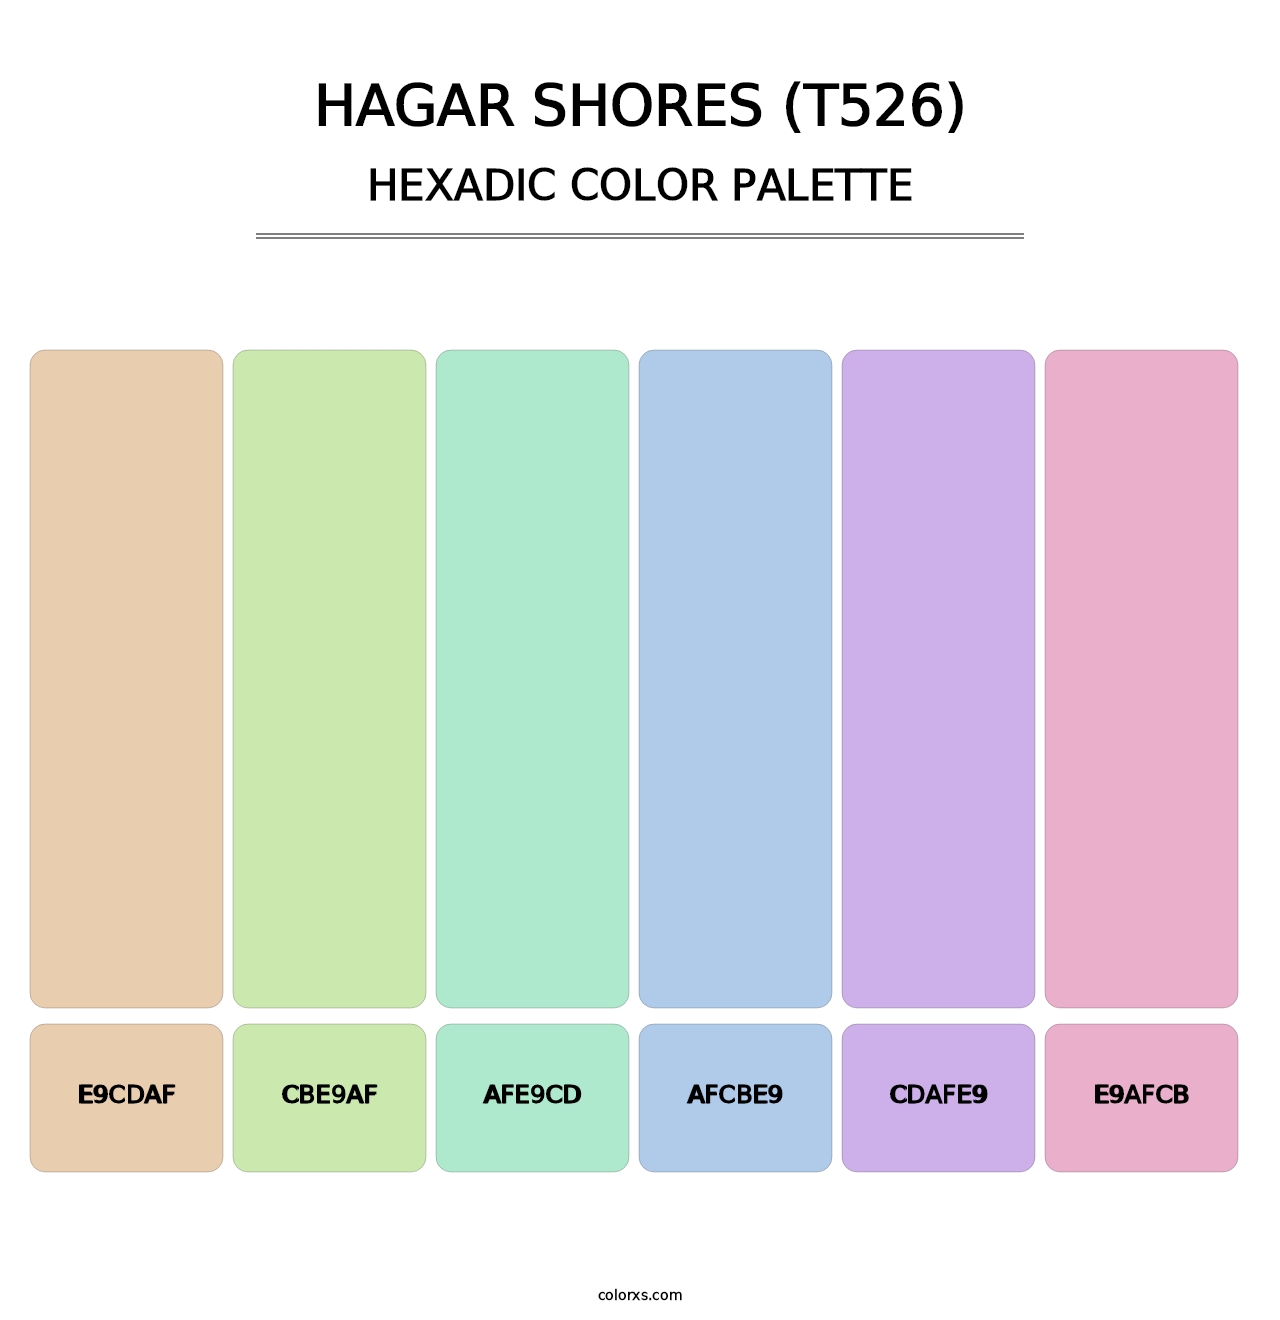 Hagar Shores (T526) - Hexadic Color Palette